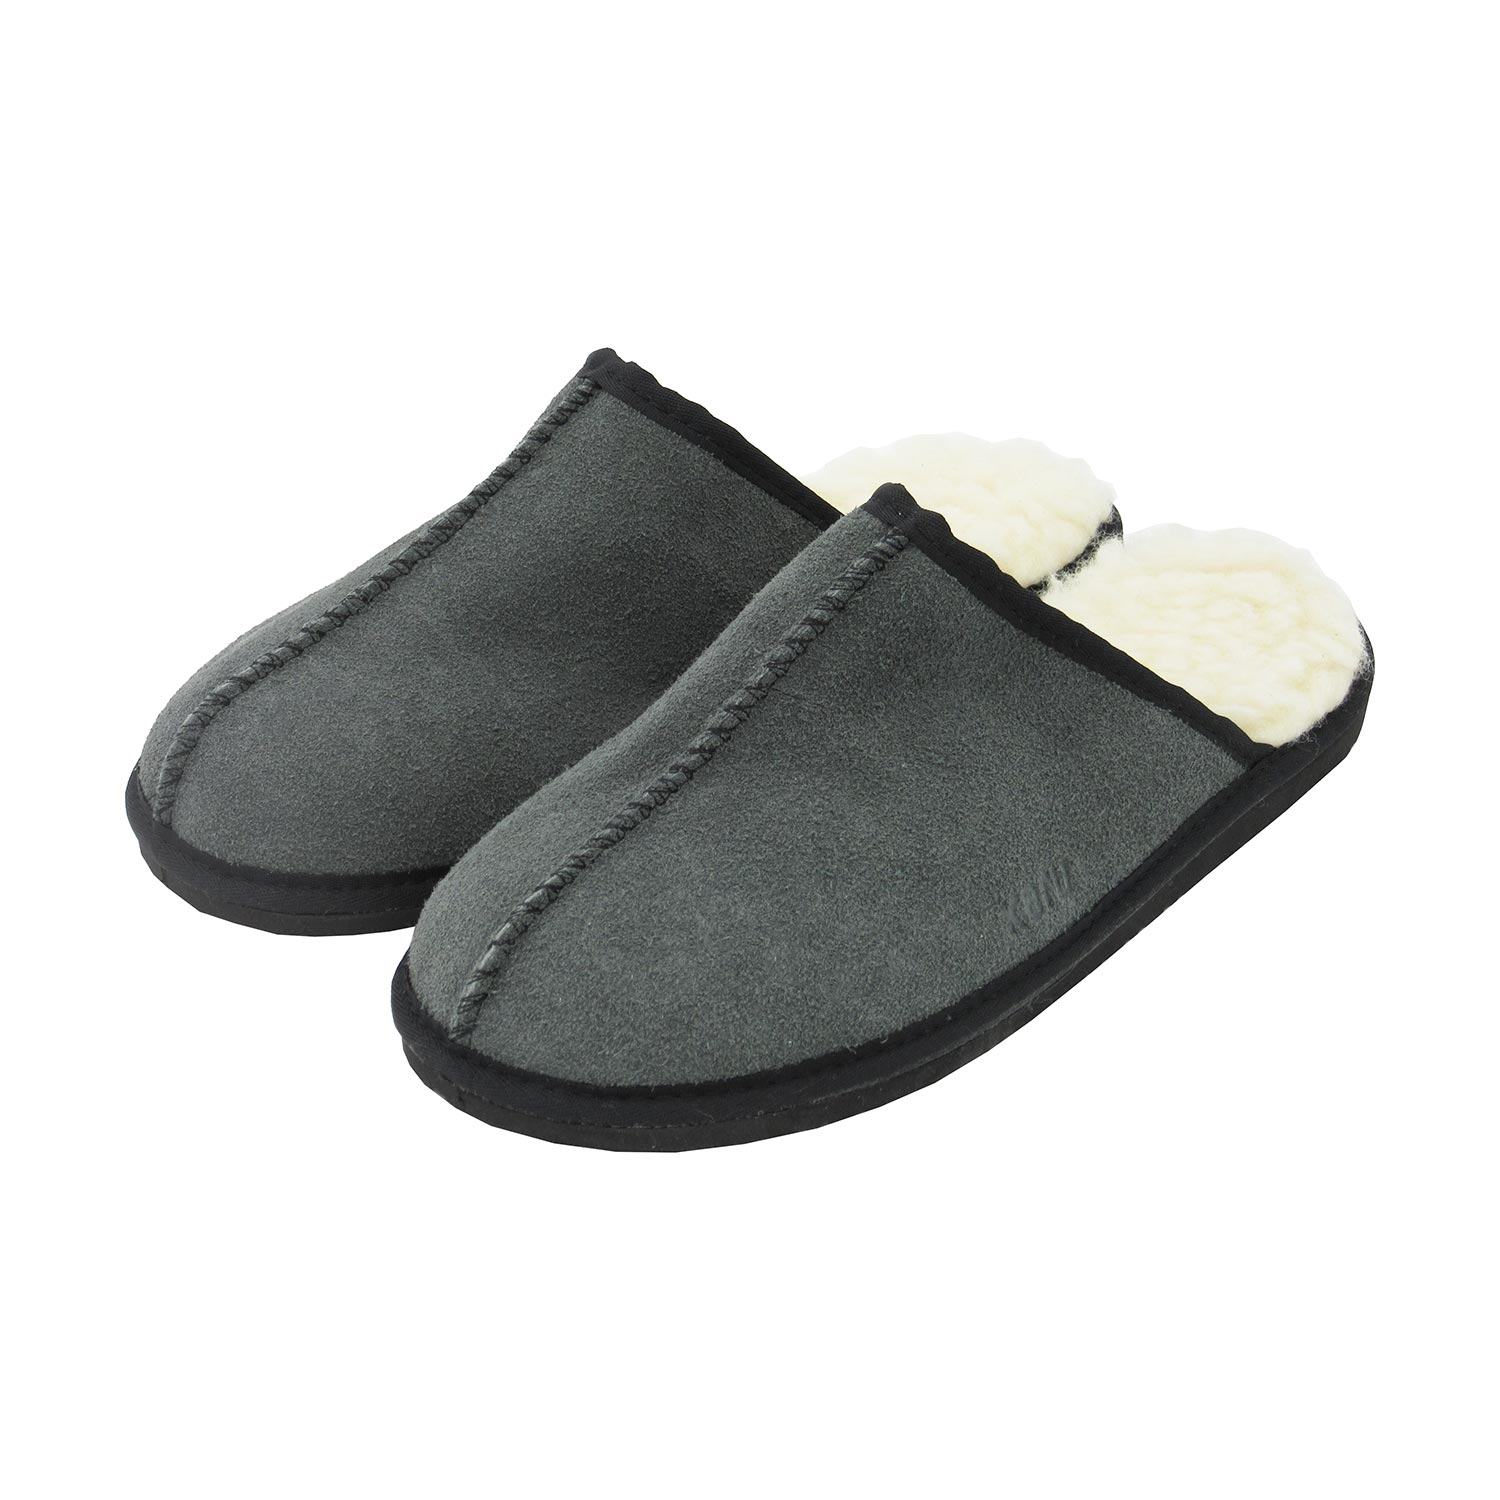 Karu Mule Charcoal Sheepskin & Wool Slippers clothing & accessories Karu Slippers